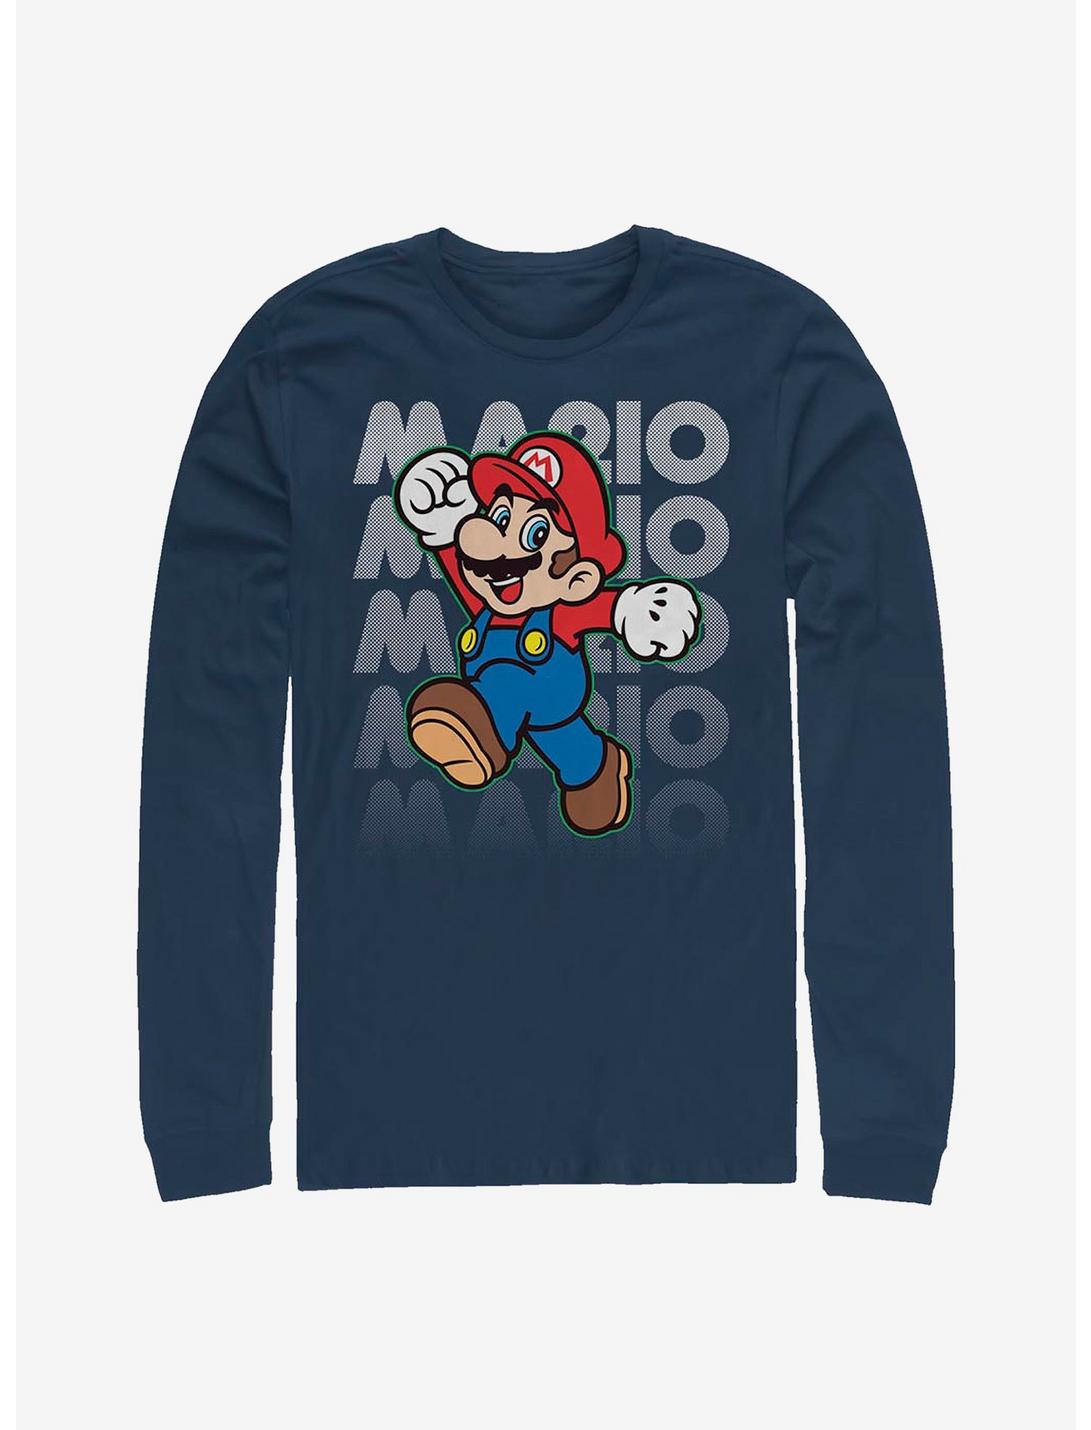 Super Mario Four Long-Sleeve T-Shirt, NAVY, hi-res